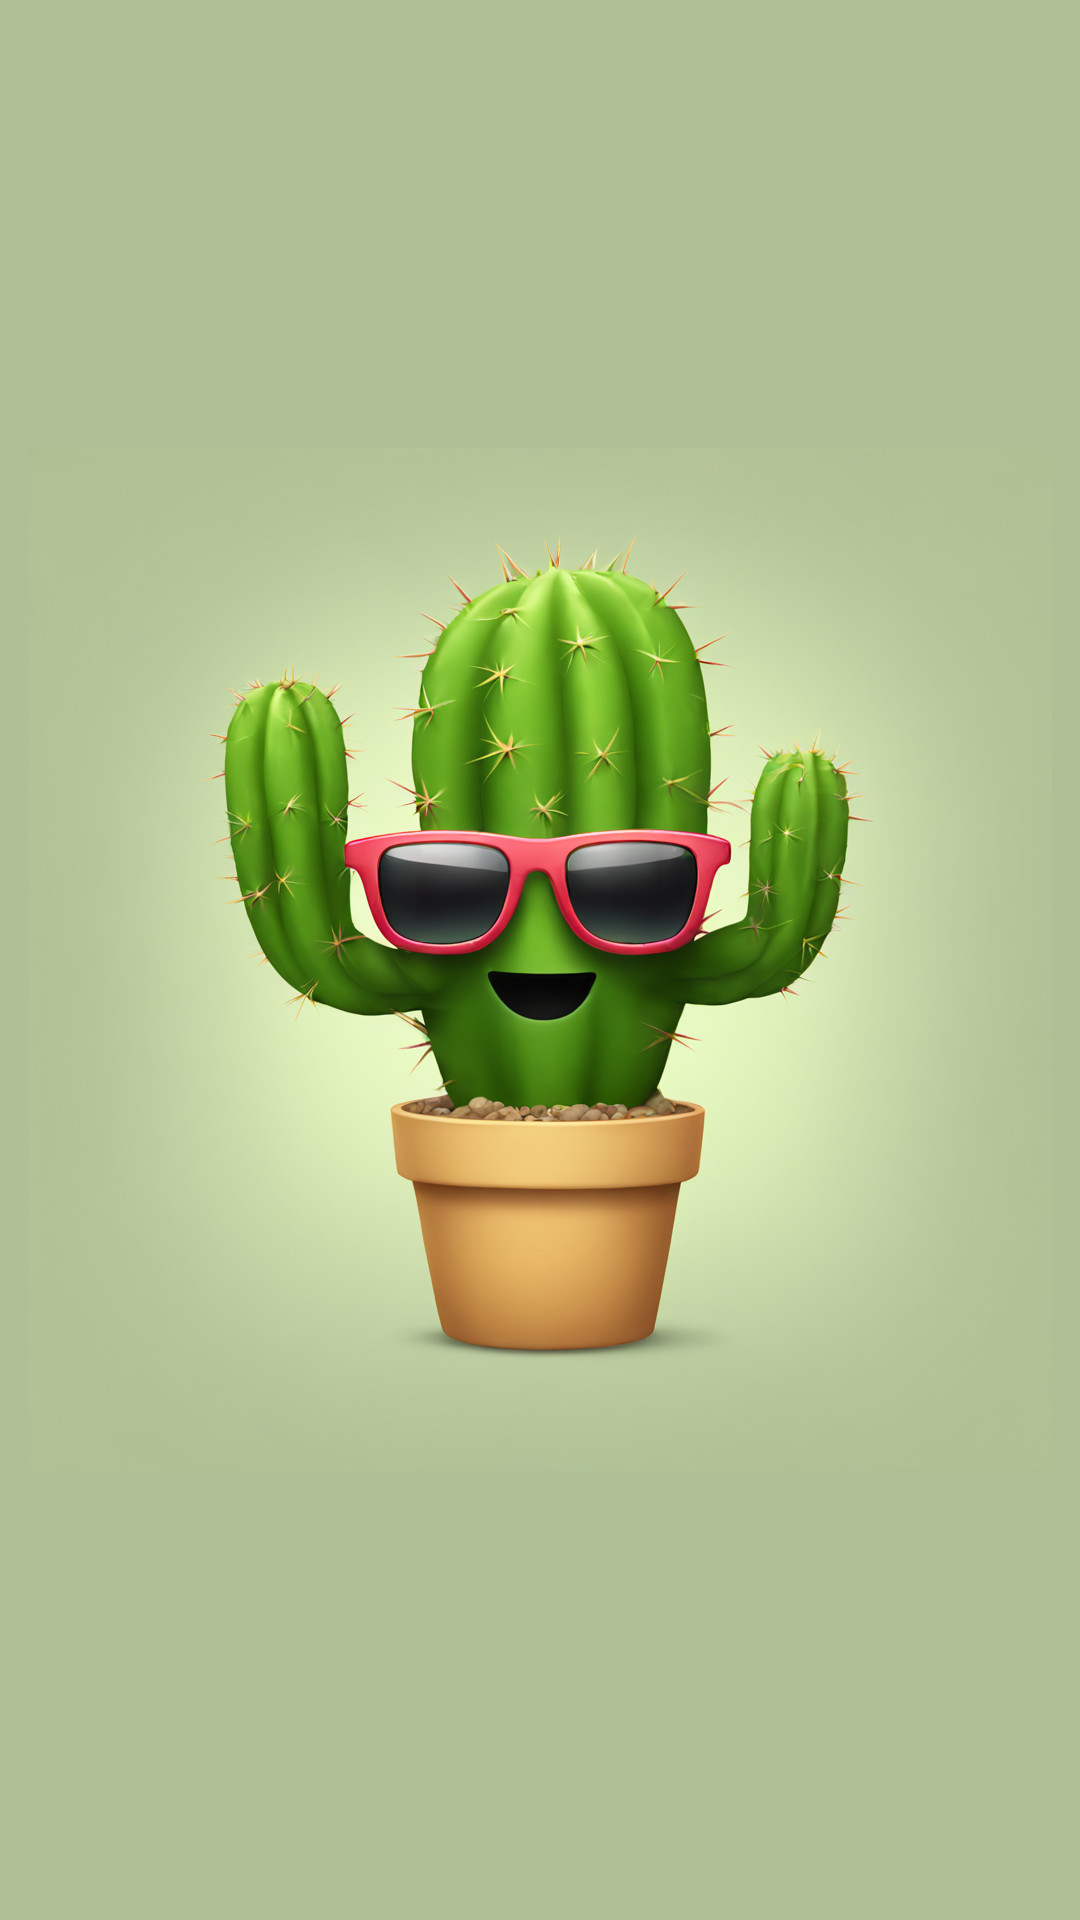 Cactus with sunglasses